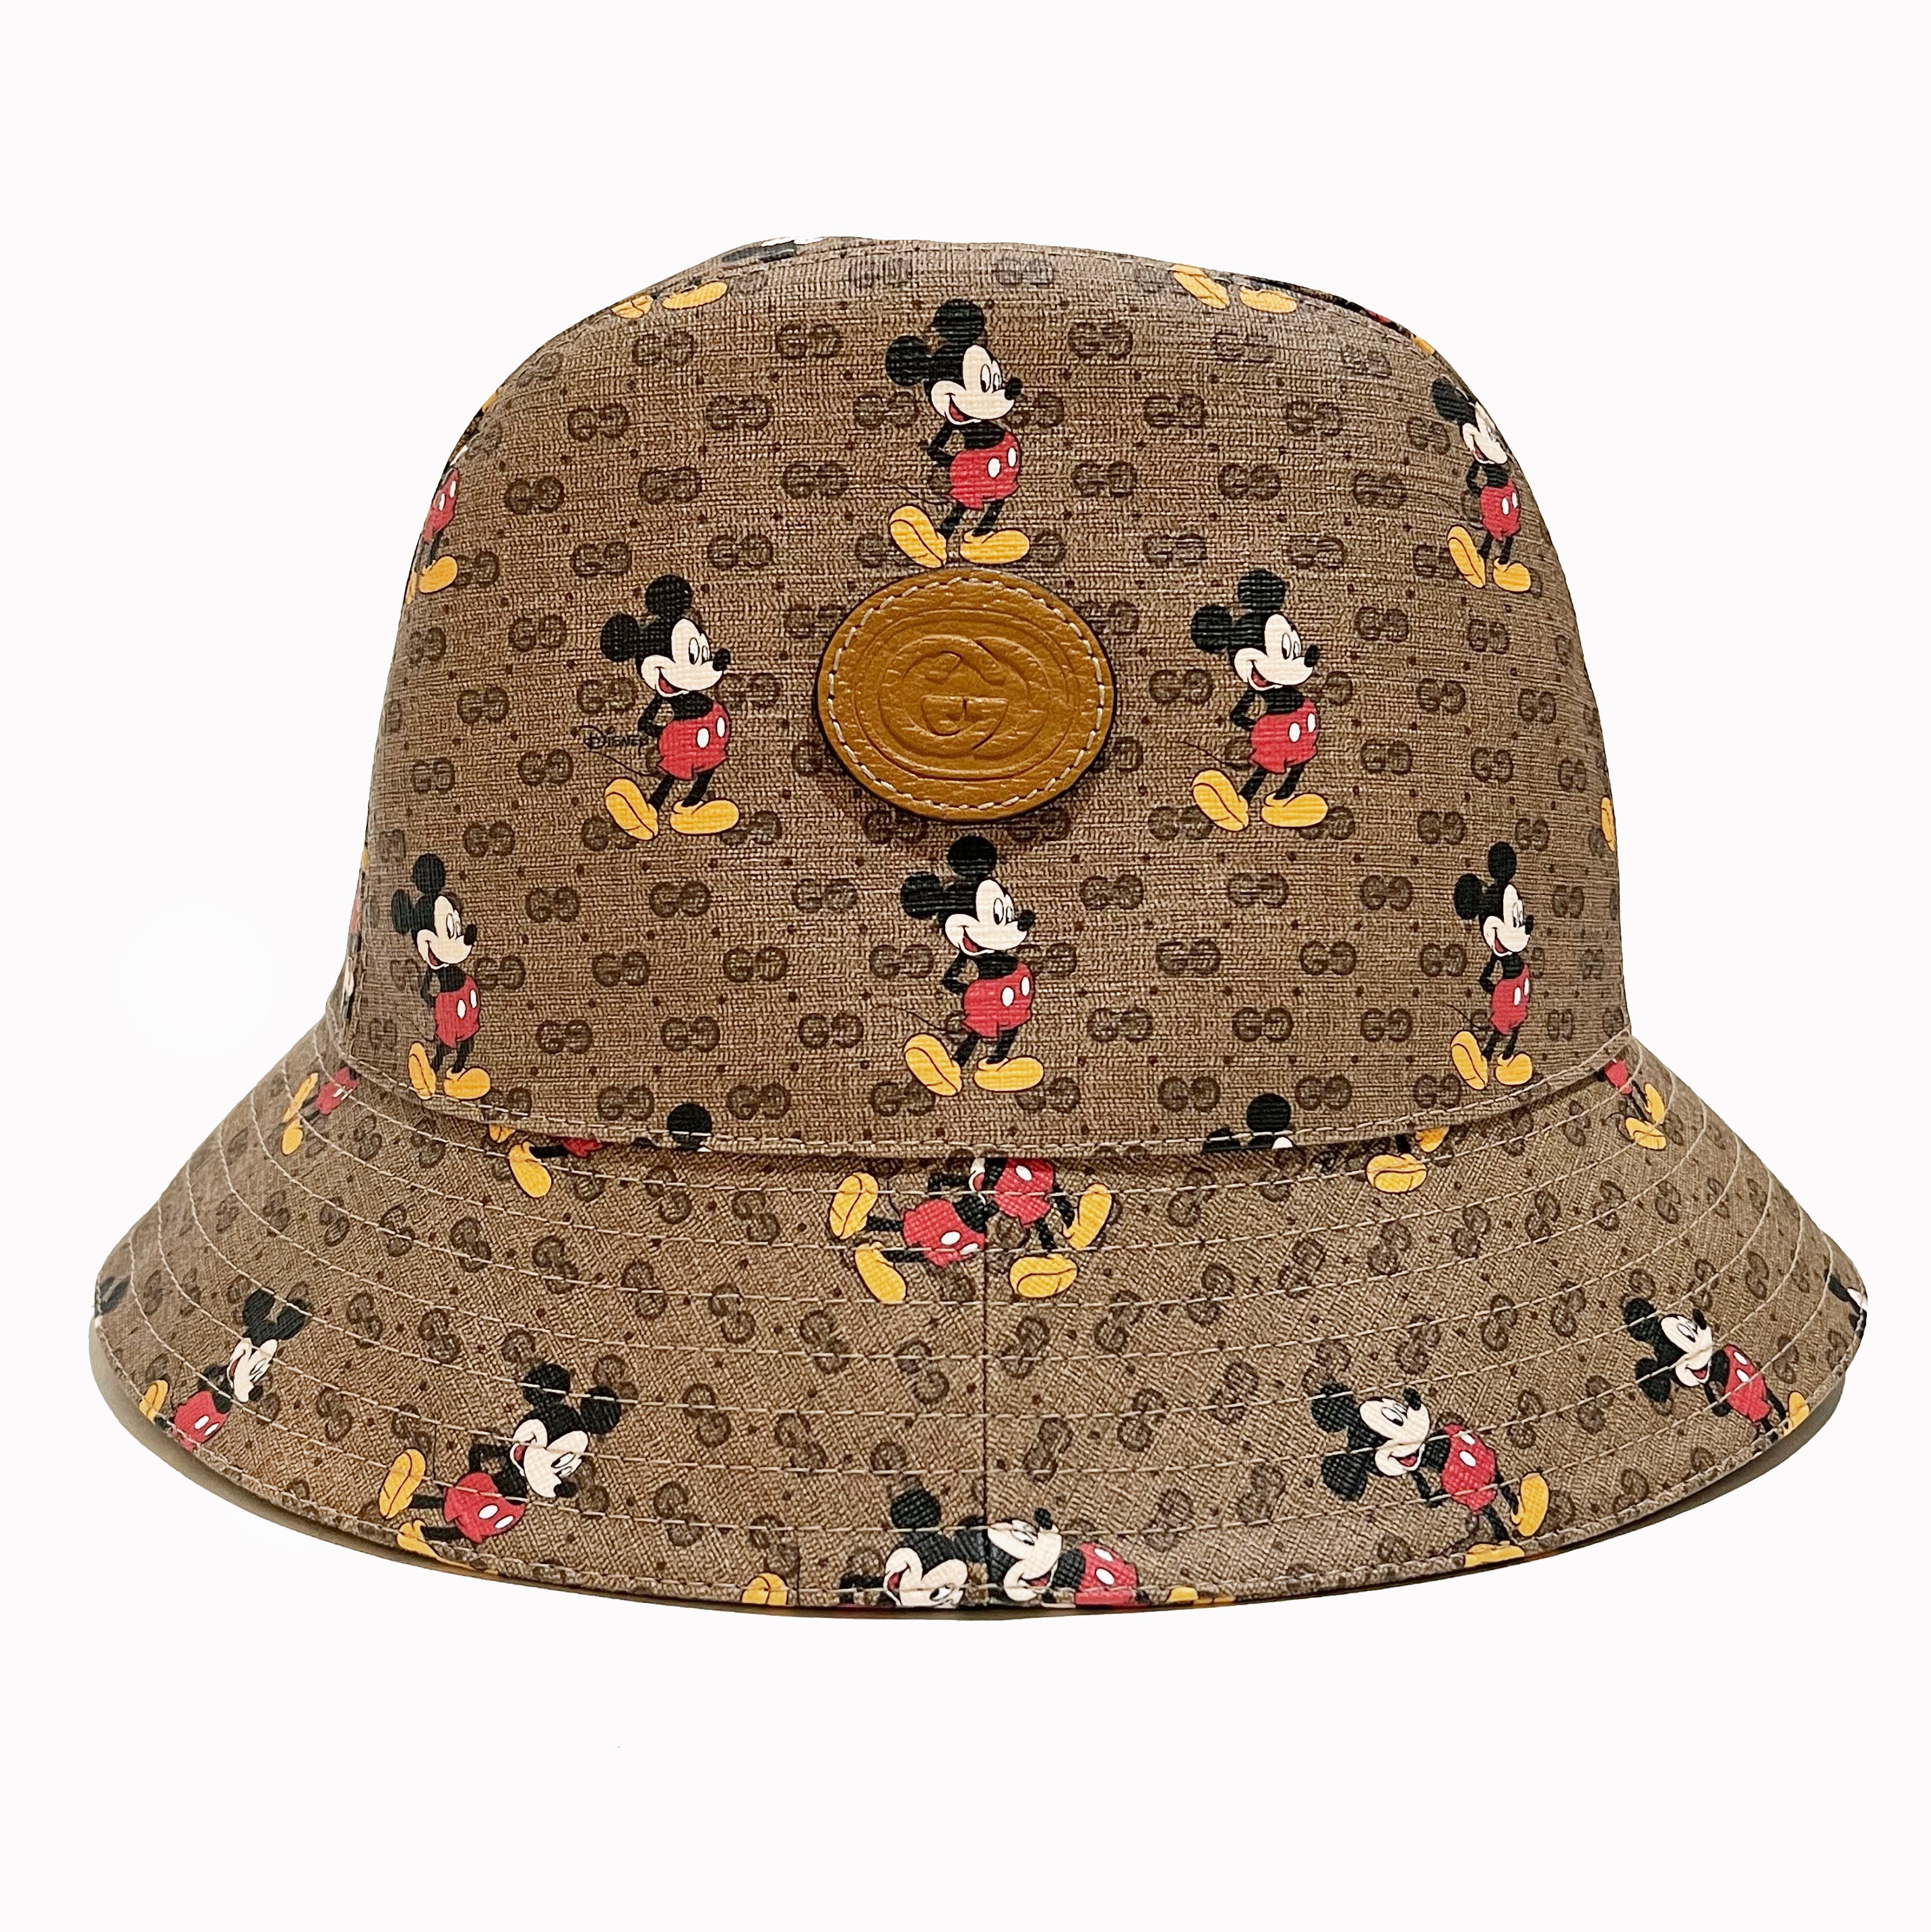 Gucci, Accessories, Gucci Bucket Hat Price Firm